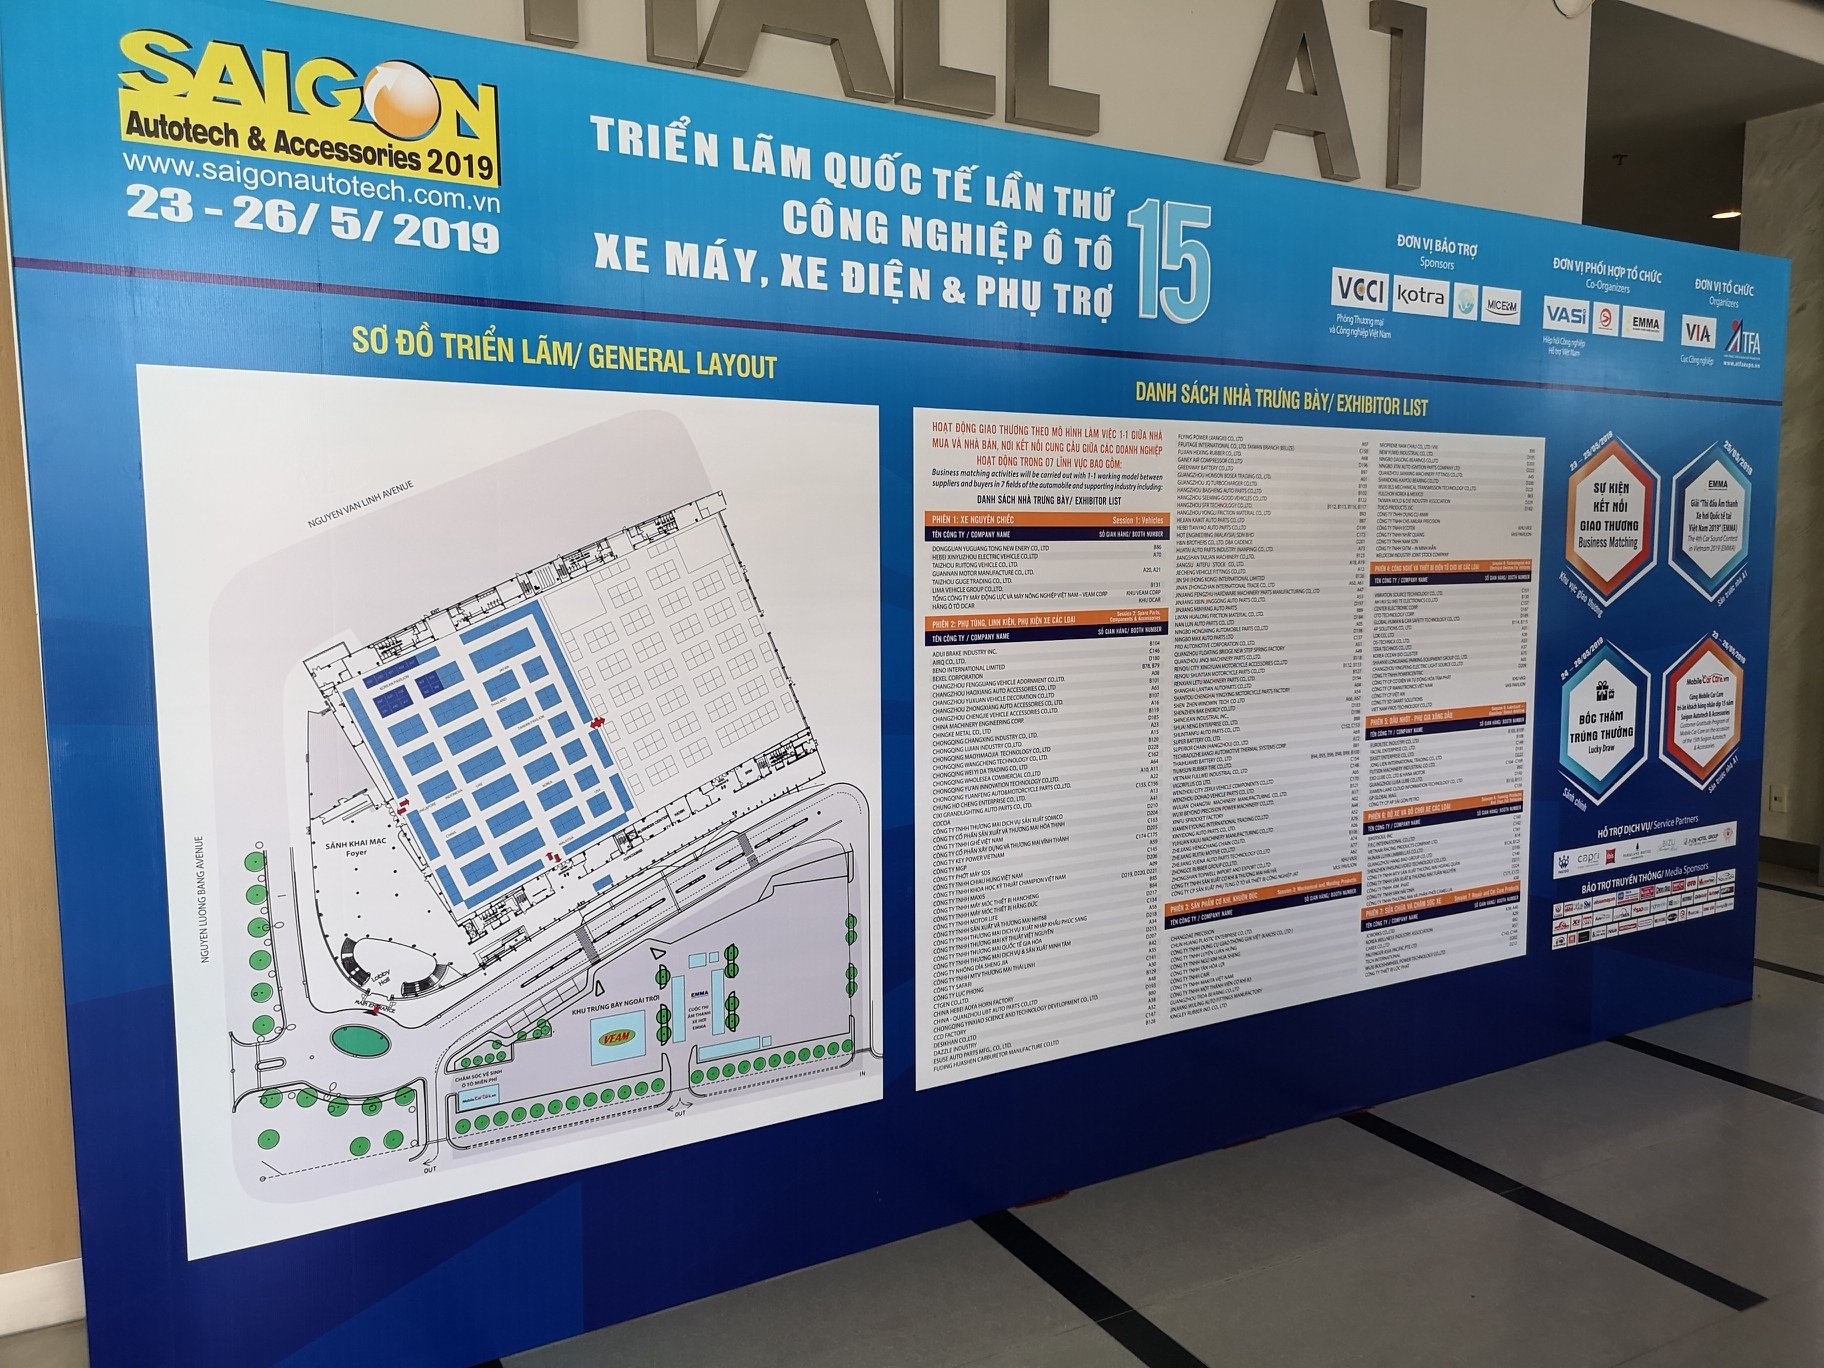 PAC - Participated in Vietnam Saigon Autotech & Accessories 2019